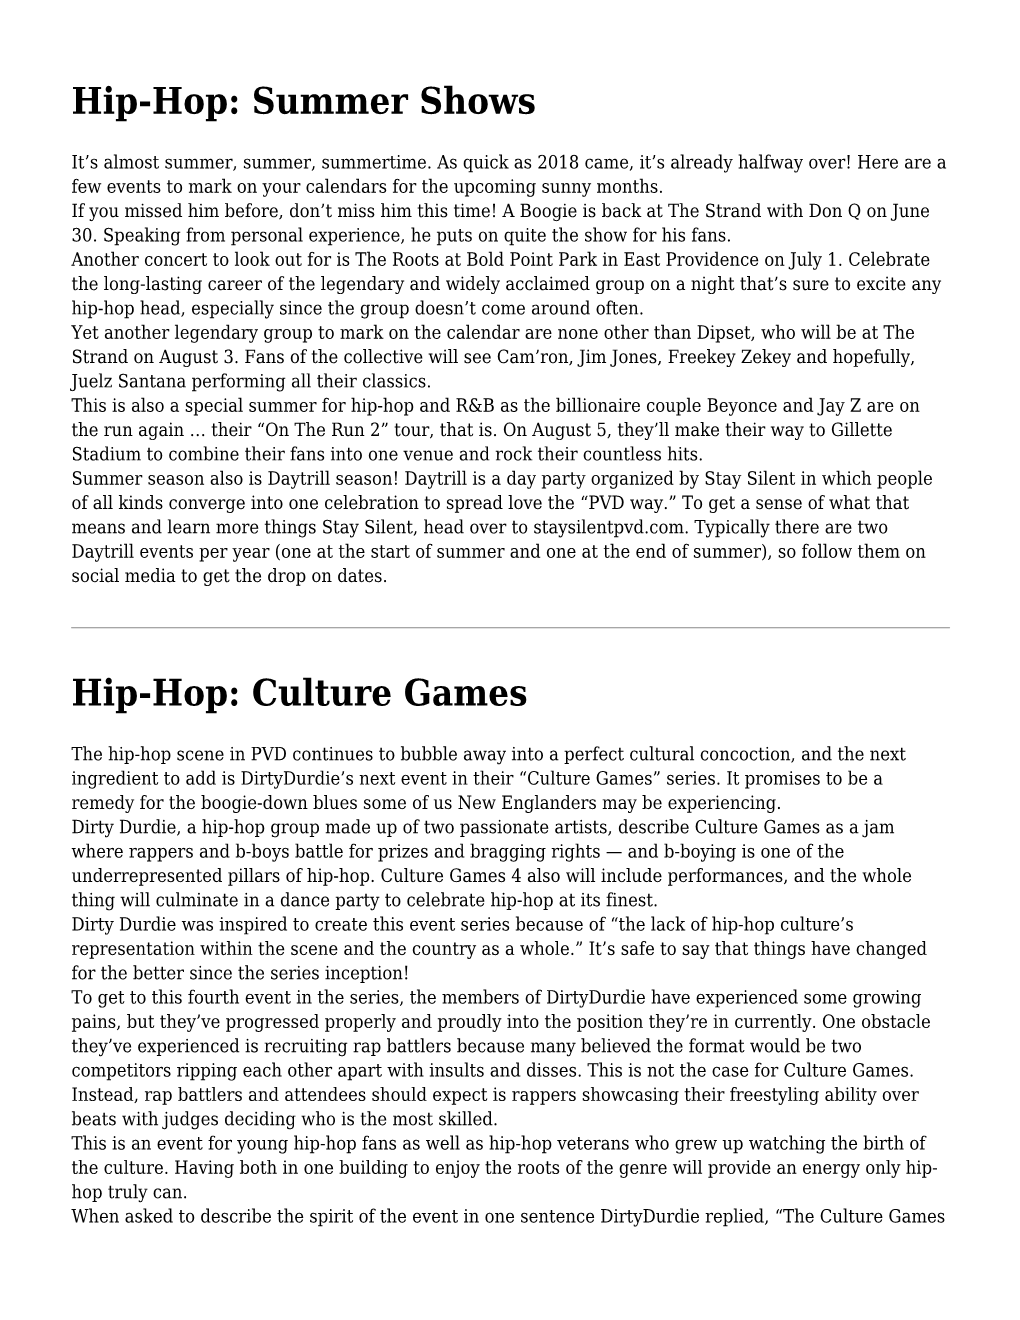 Hip-Hop: Summer Shows,Hip-Hop: Culture Games,Hip-Hop: Warming